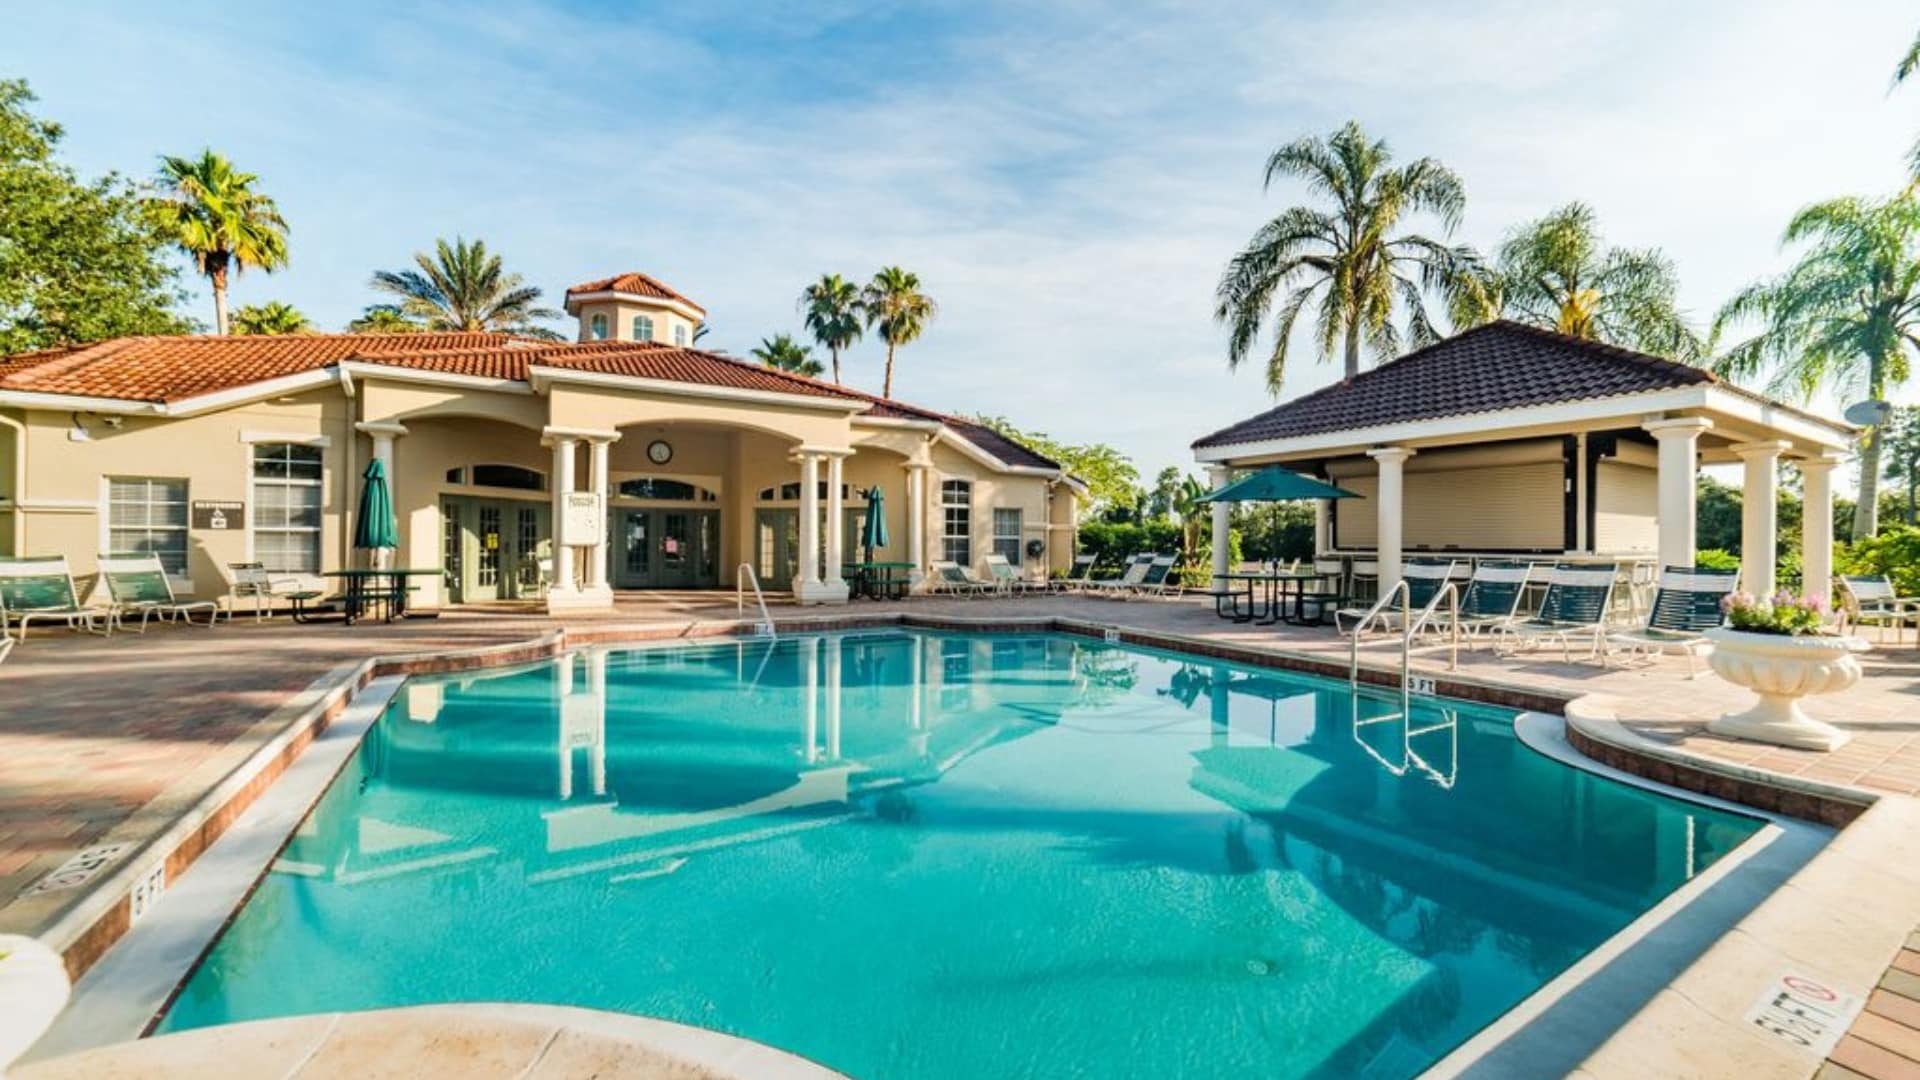 Emerald Island Resort in Orlando